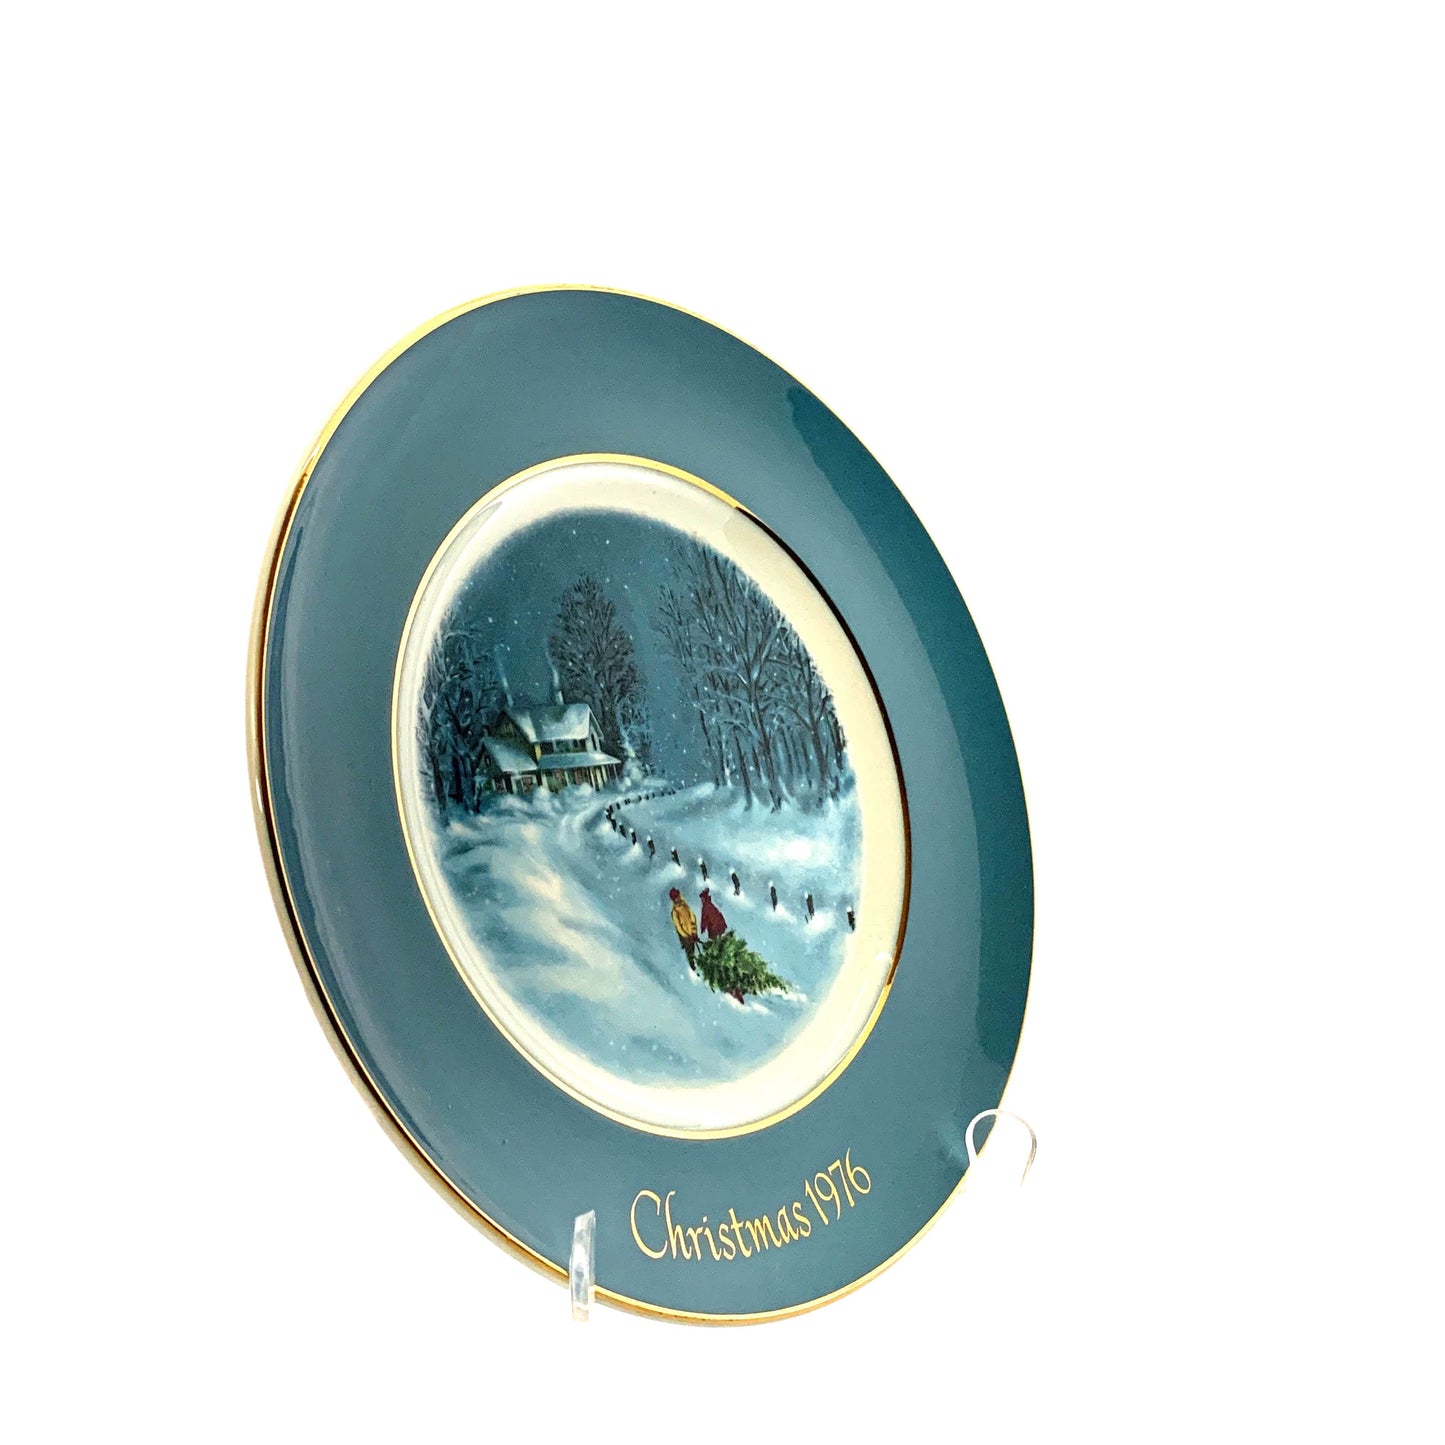 Vintage Avon Christmas Plate Series Third Edition “Bringing Home The Tree” 1976